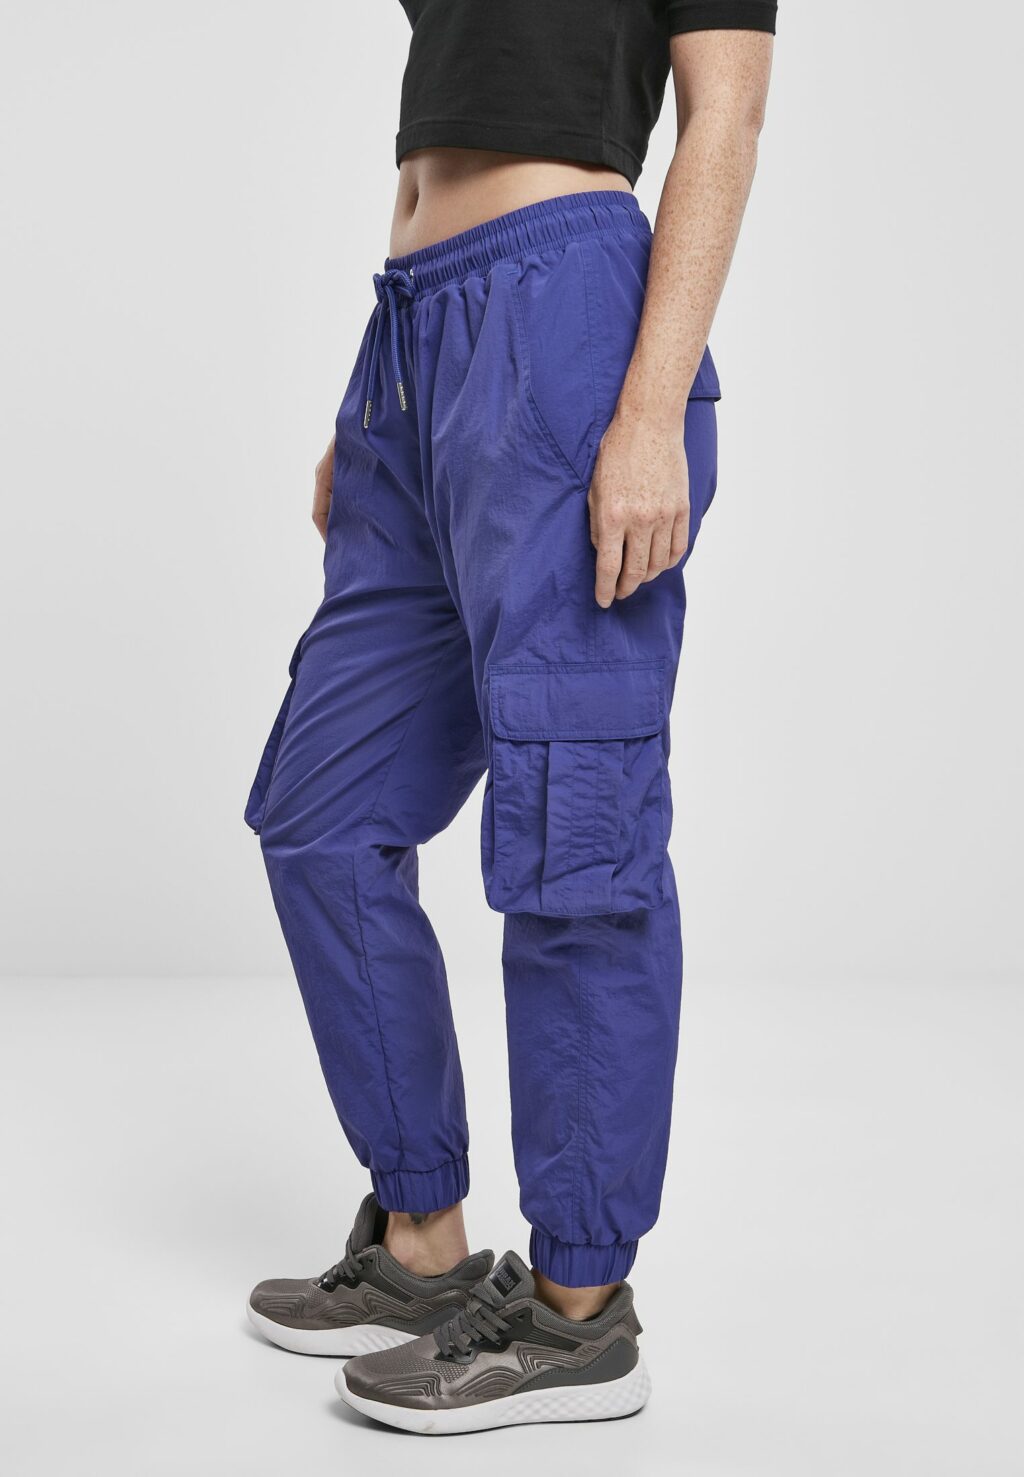 Urban Classics Ladies High Waist Crinkle Nylon Cargo Pants bluepurple TB3636